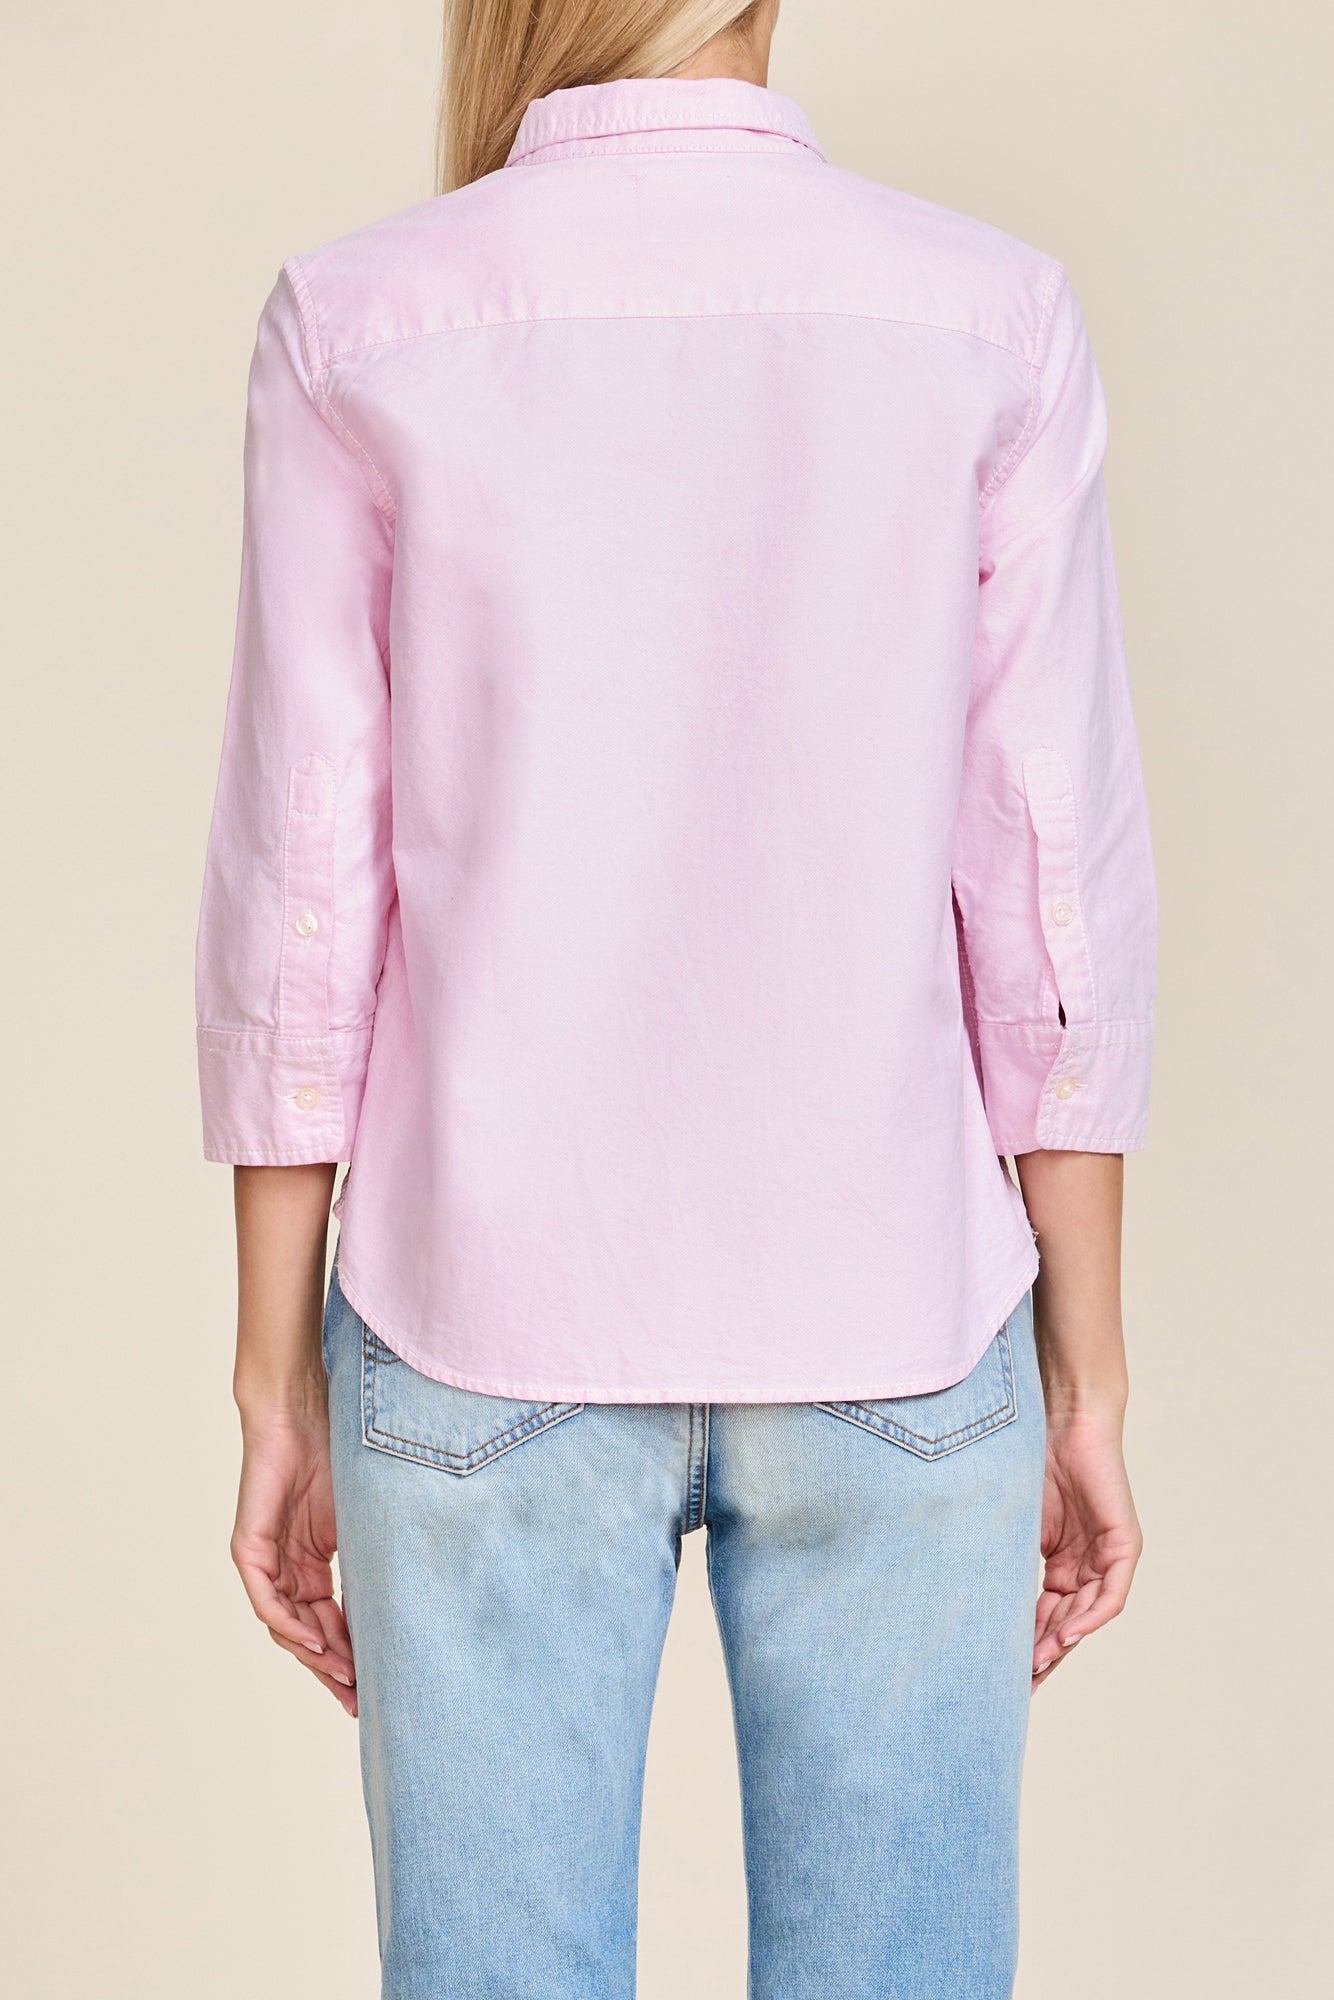 Adrienne Shrunken Shirt - Pink